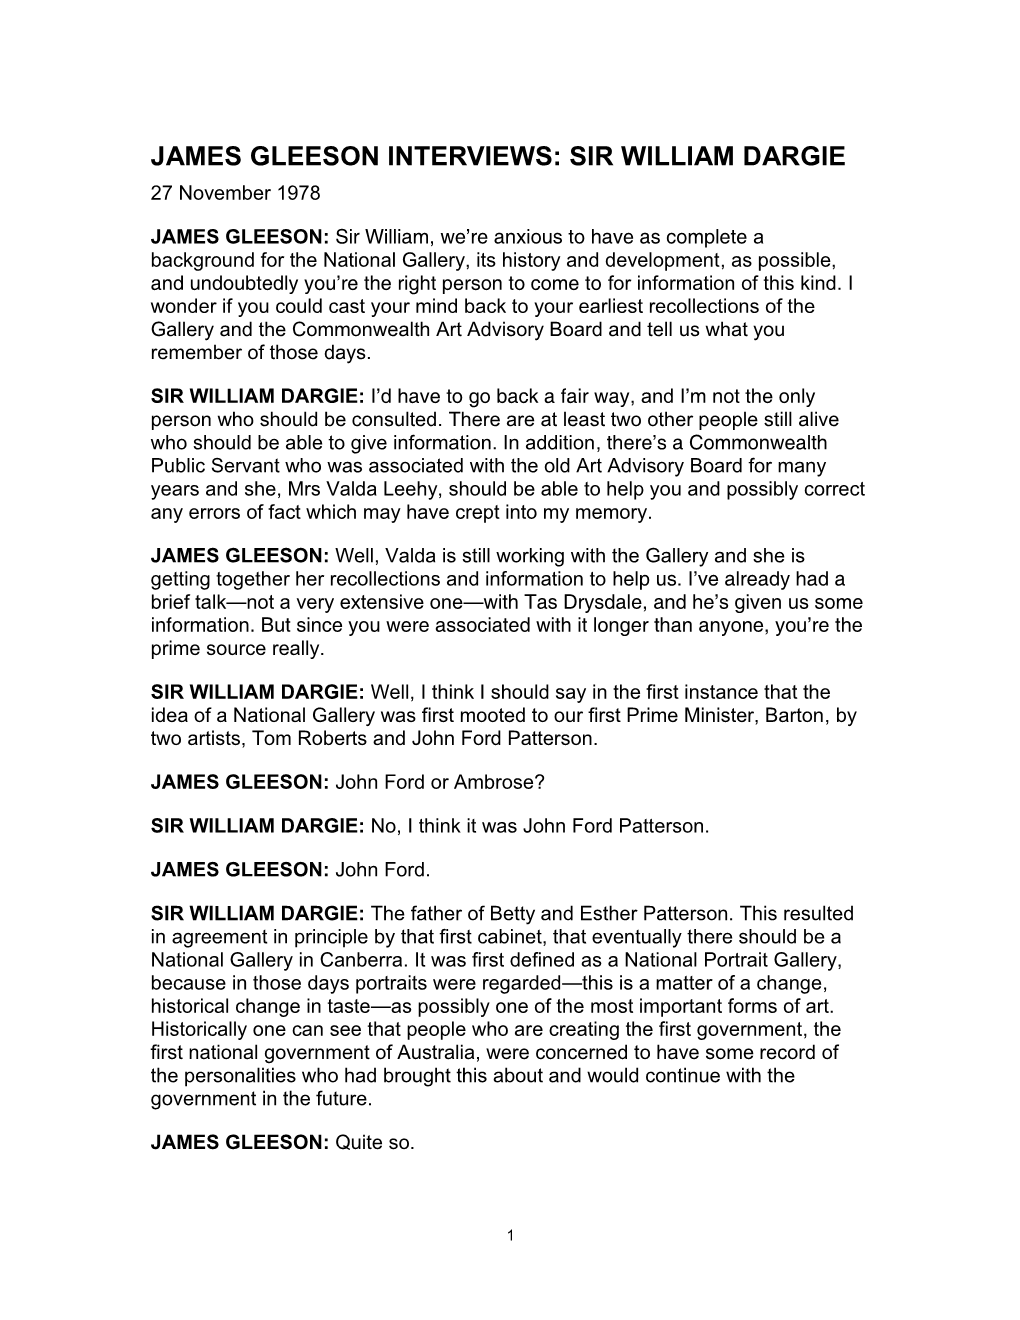 JAMES GLEESON INTERVIEWS: SIR WILLIAM DARGIE 27 November 1978